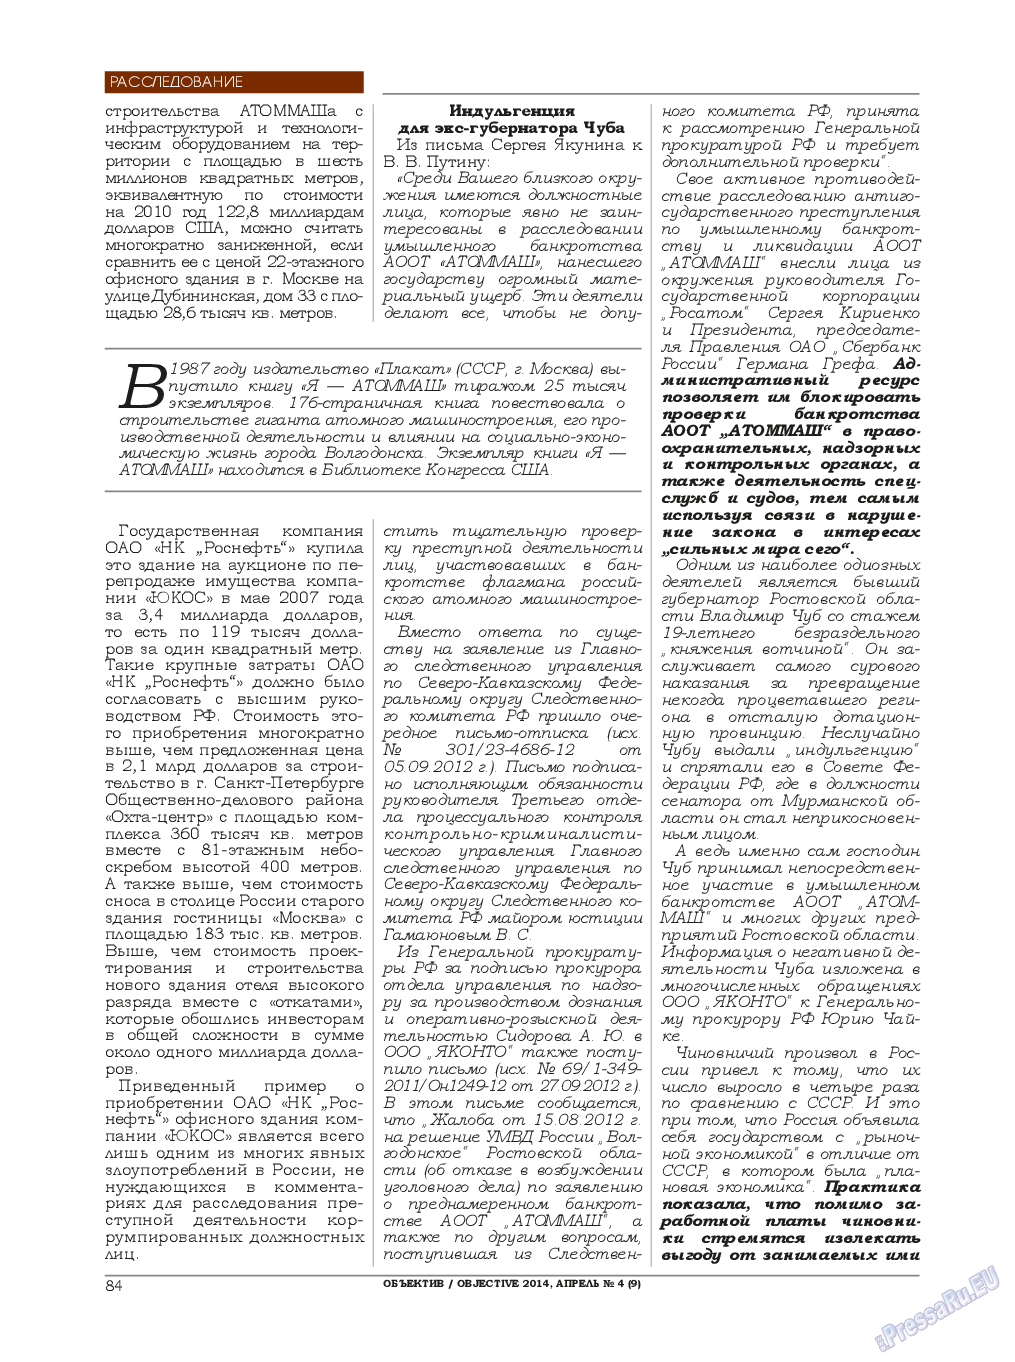 Объектив EU, журнал. 2014 №4 стр.84